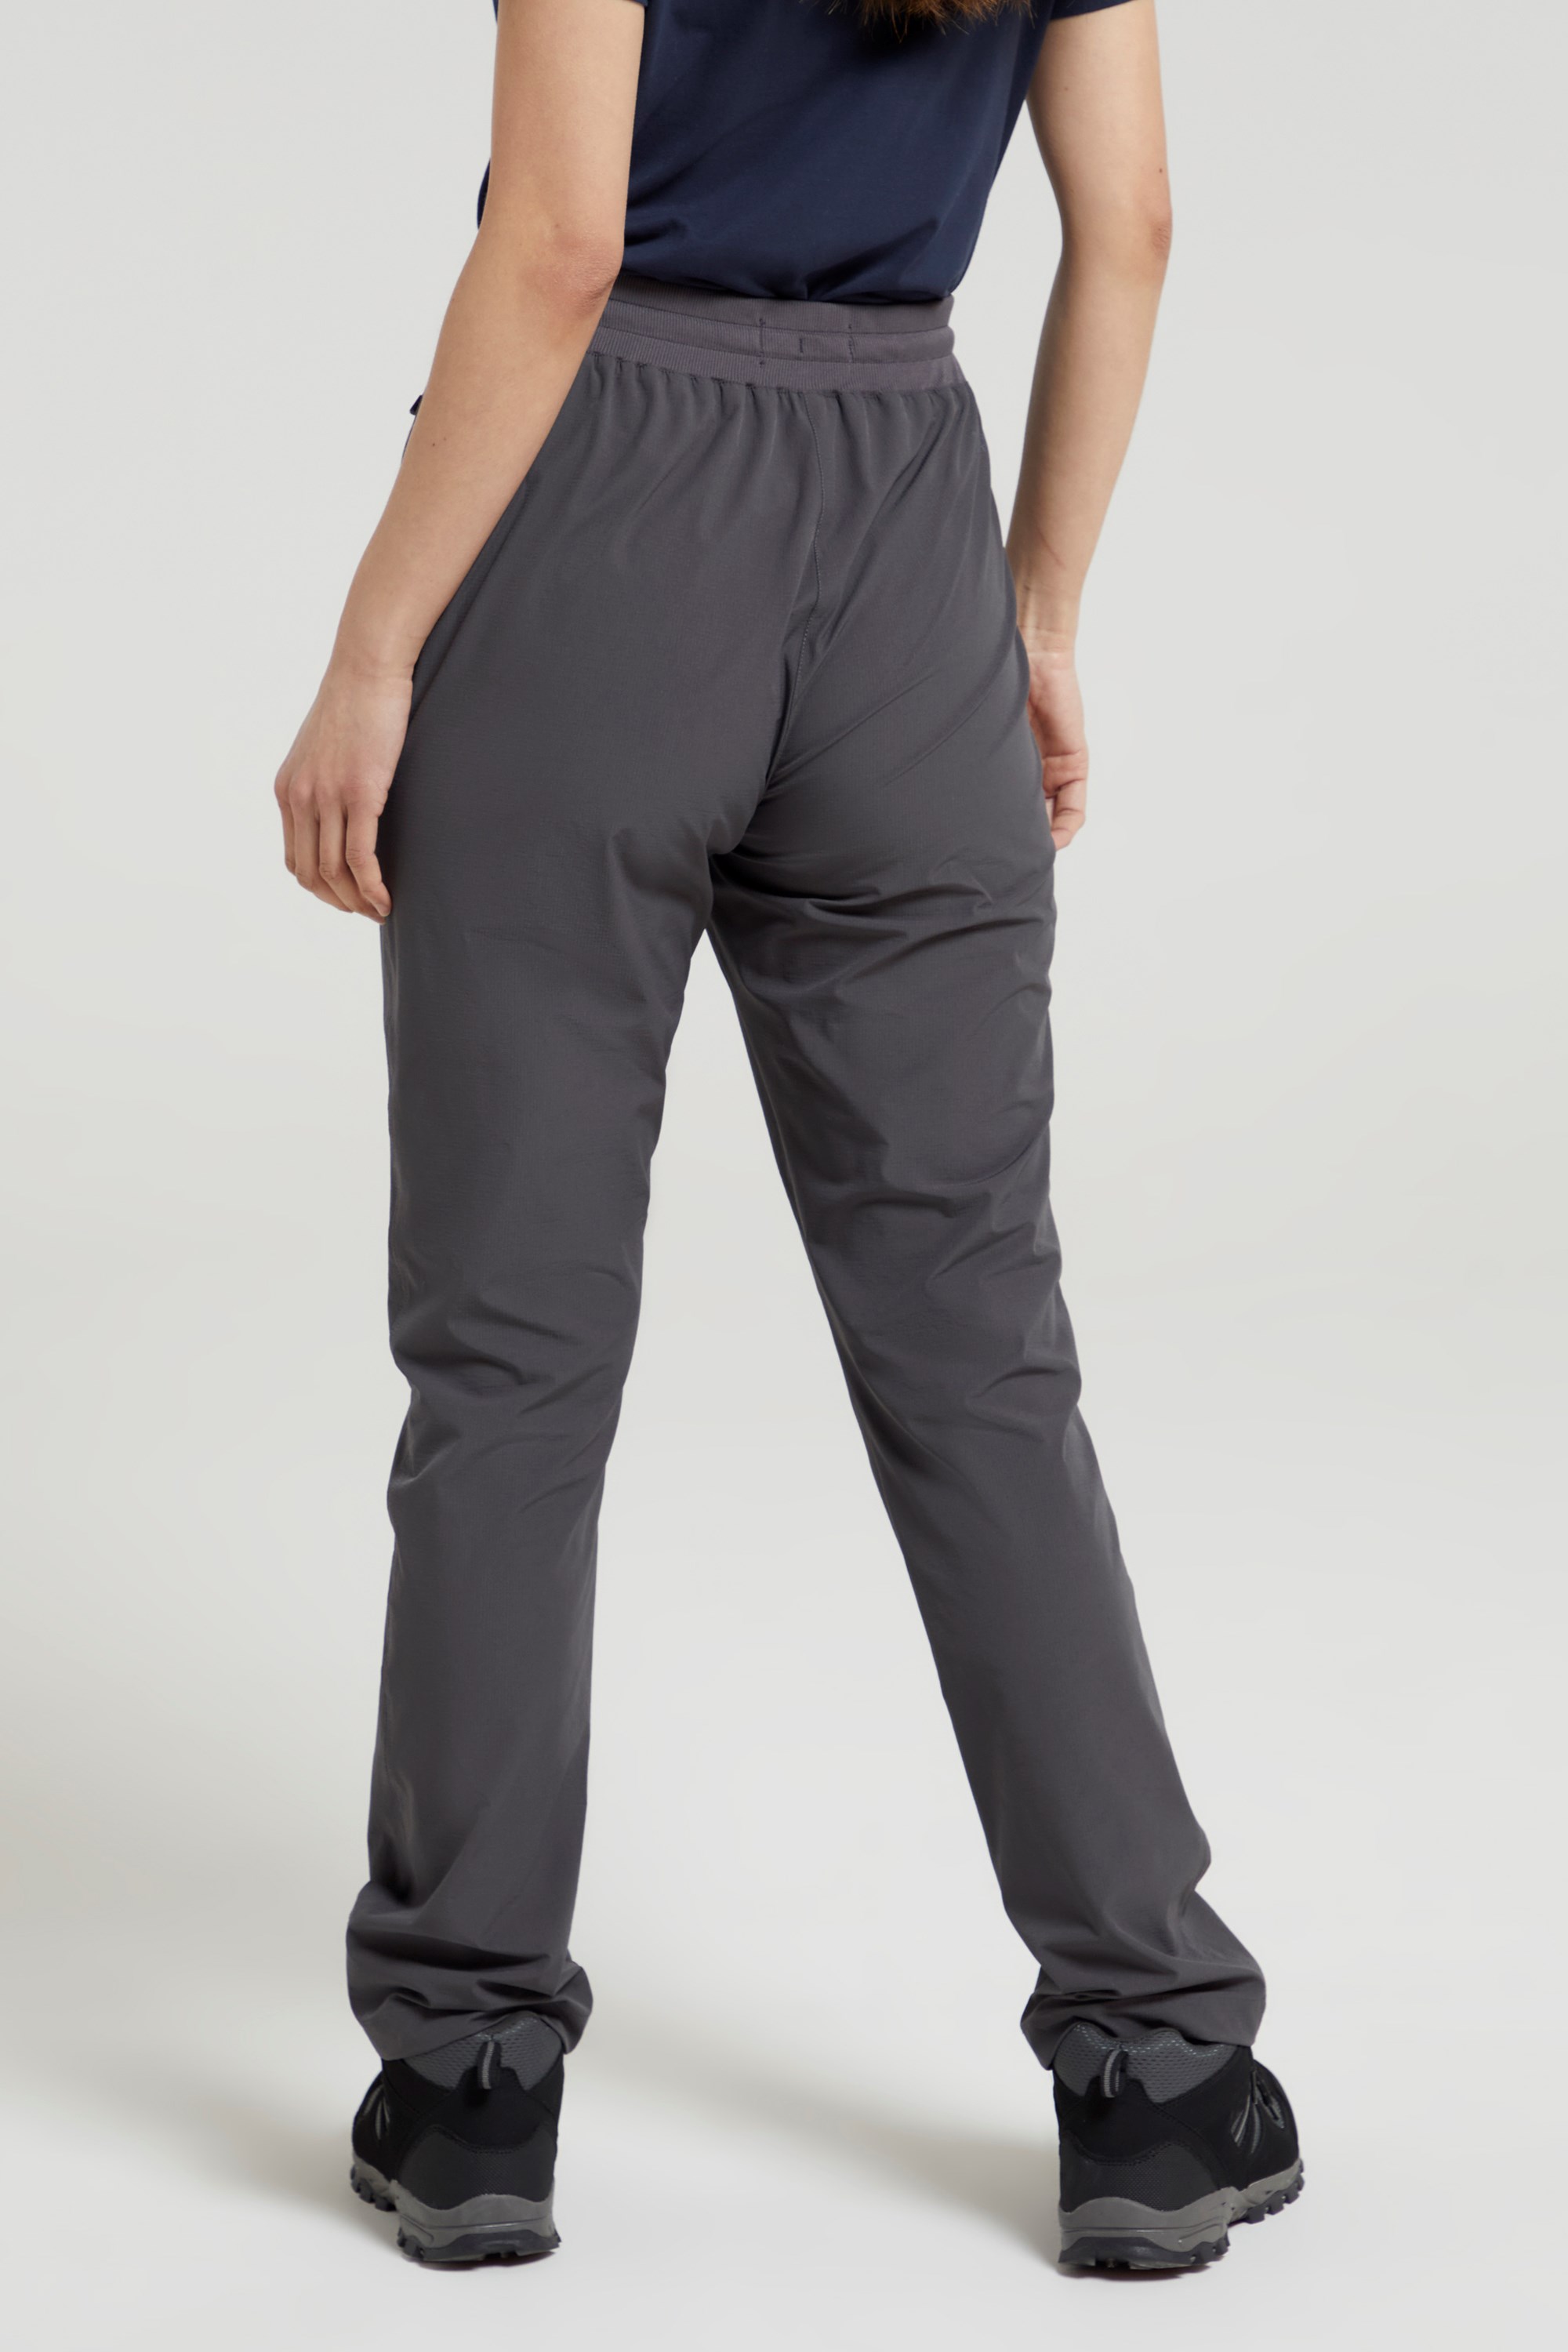 Explorer Trousers - Navy Blue, Women's Trousers & Yoga Pants